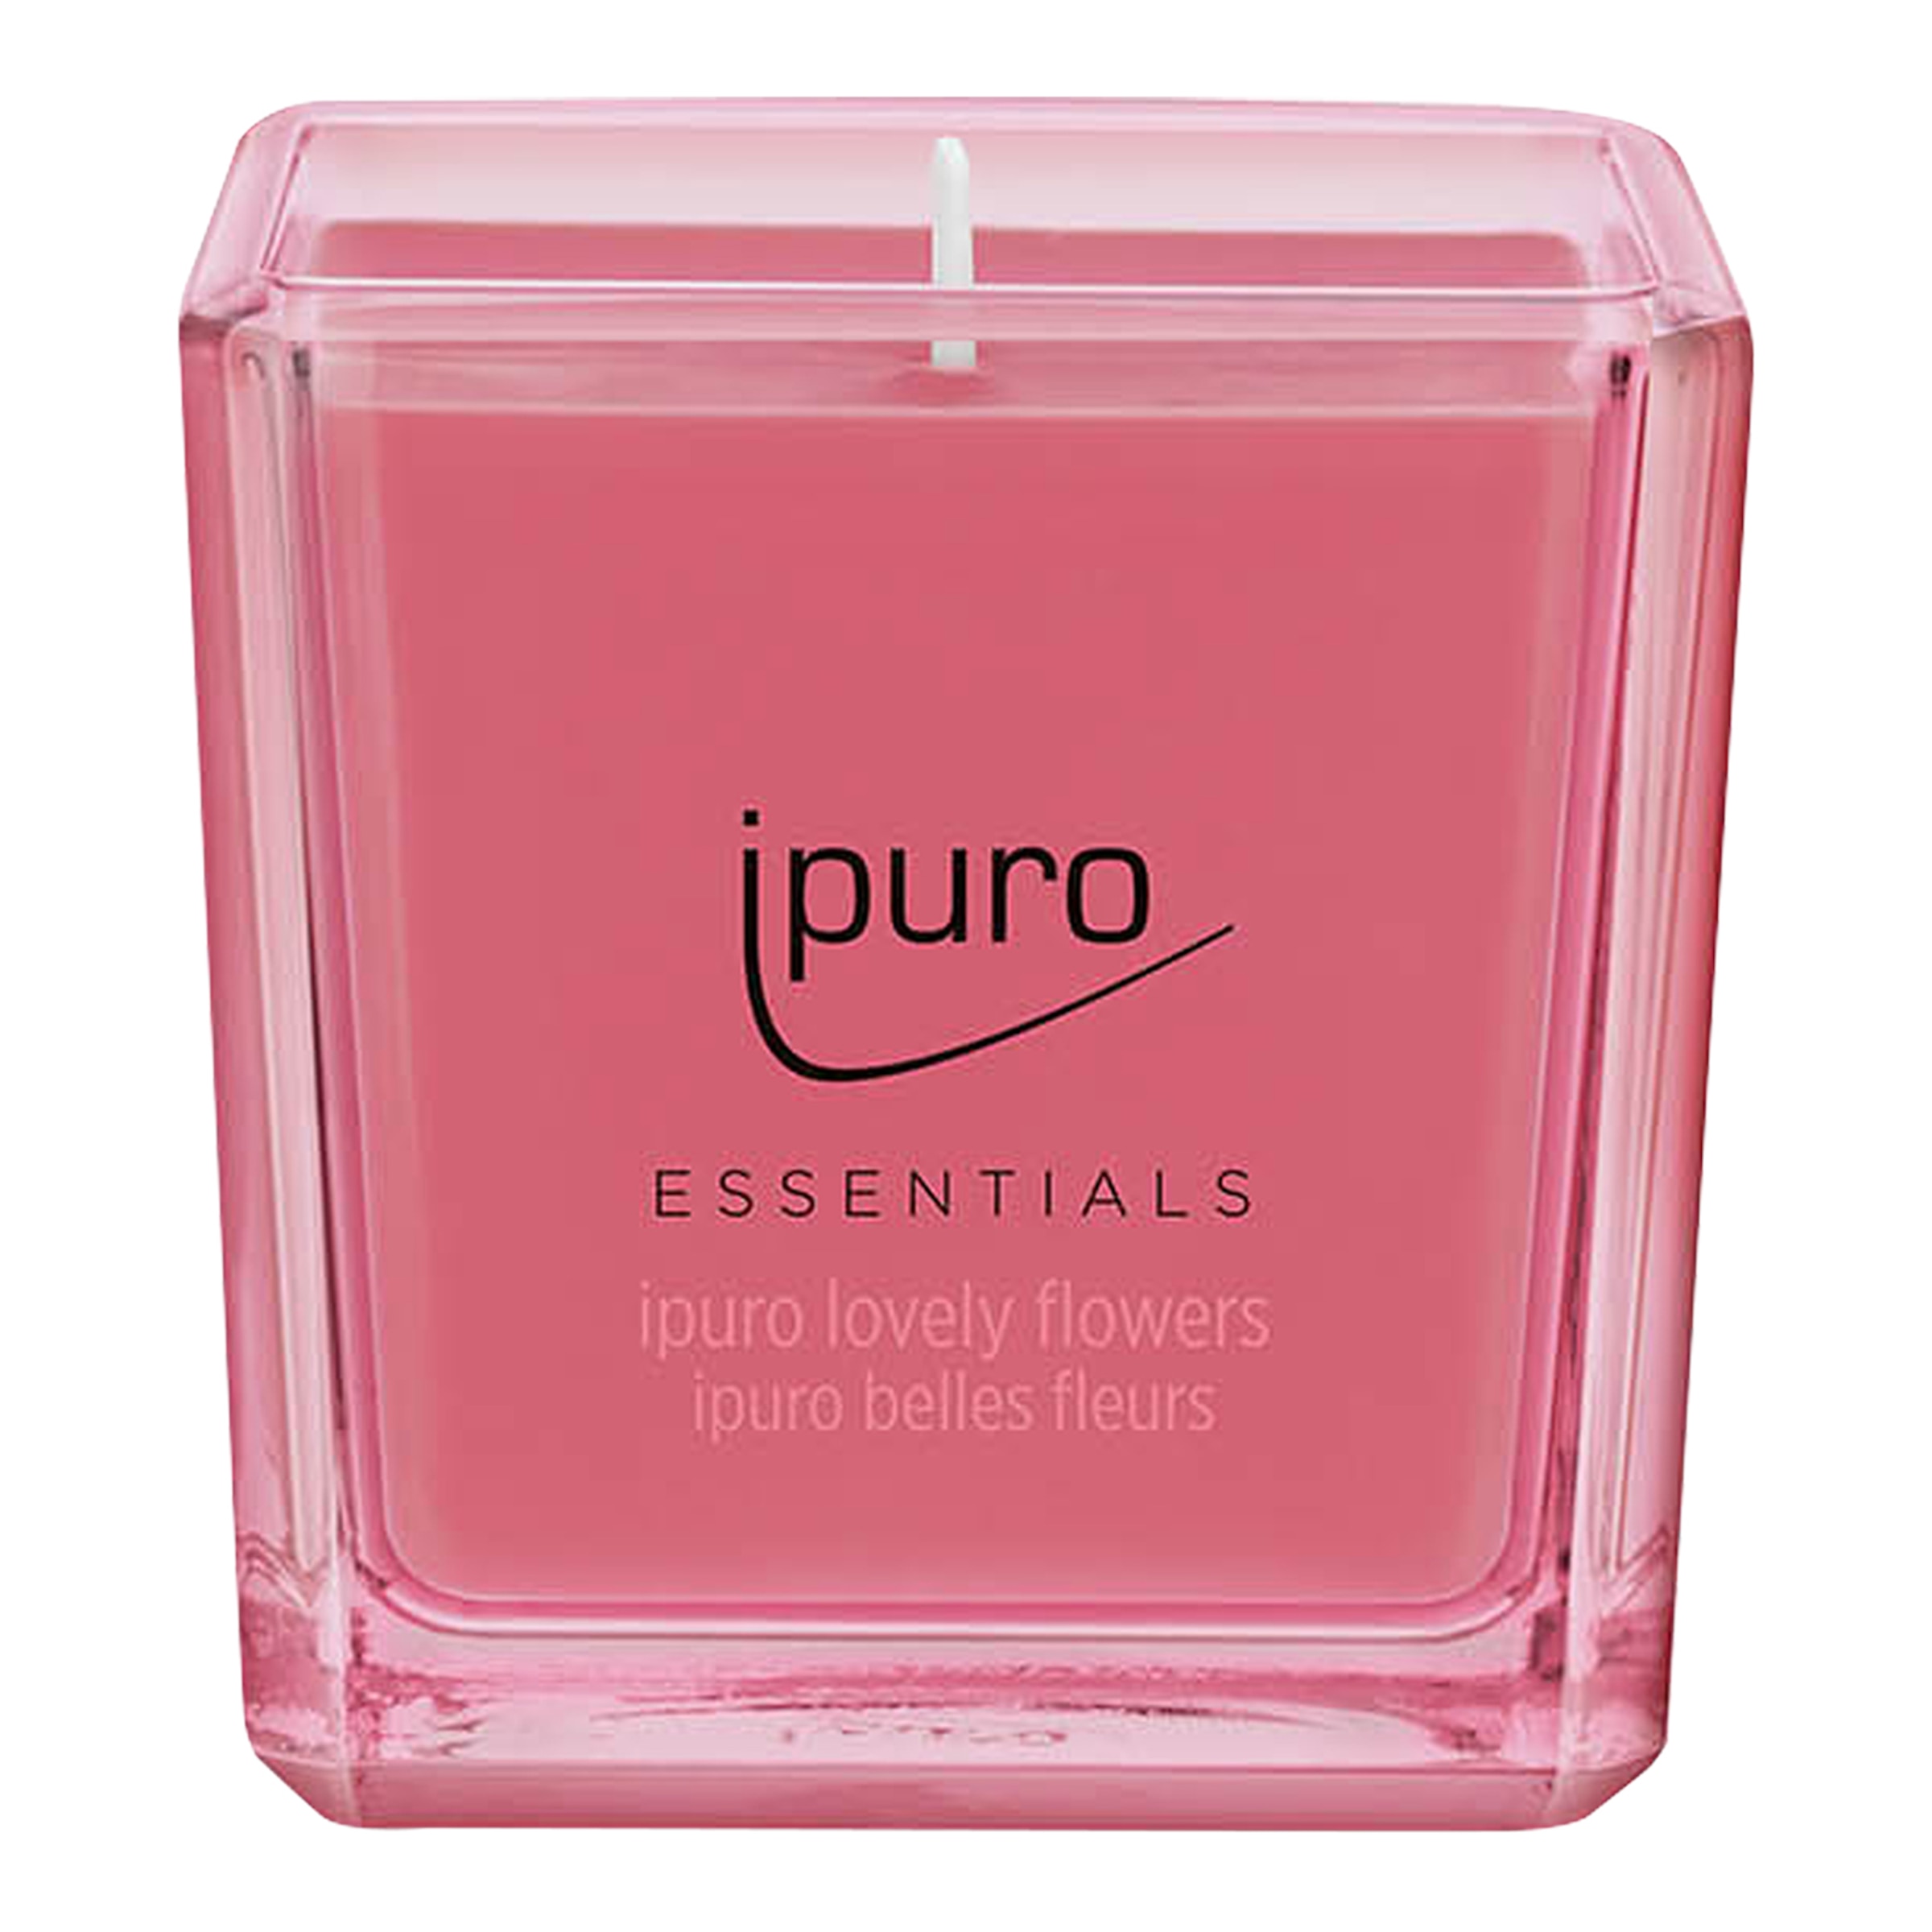 ipuro Essentials lovely flowers Bougie parfumée